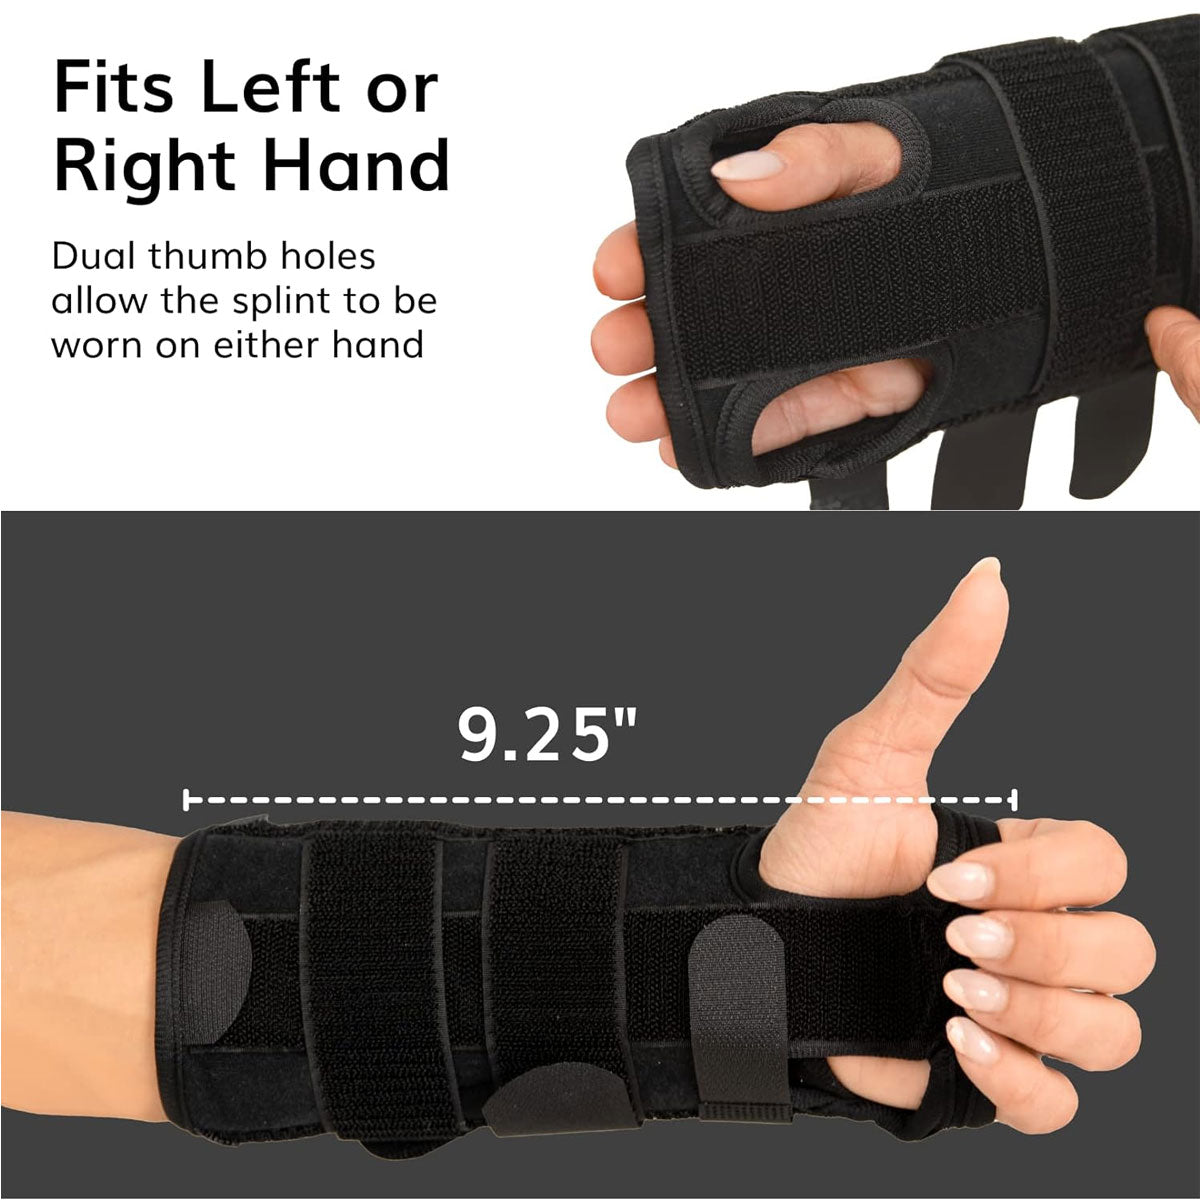 Wrist Support Brace for Carpal Tunnel Adjustable Wrist Splint - Right or Left Hand